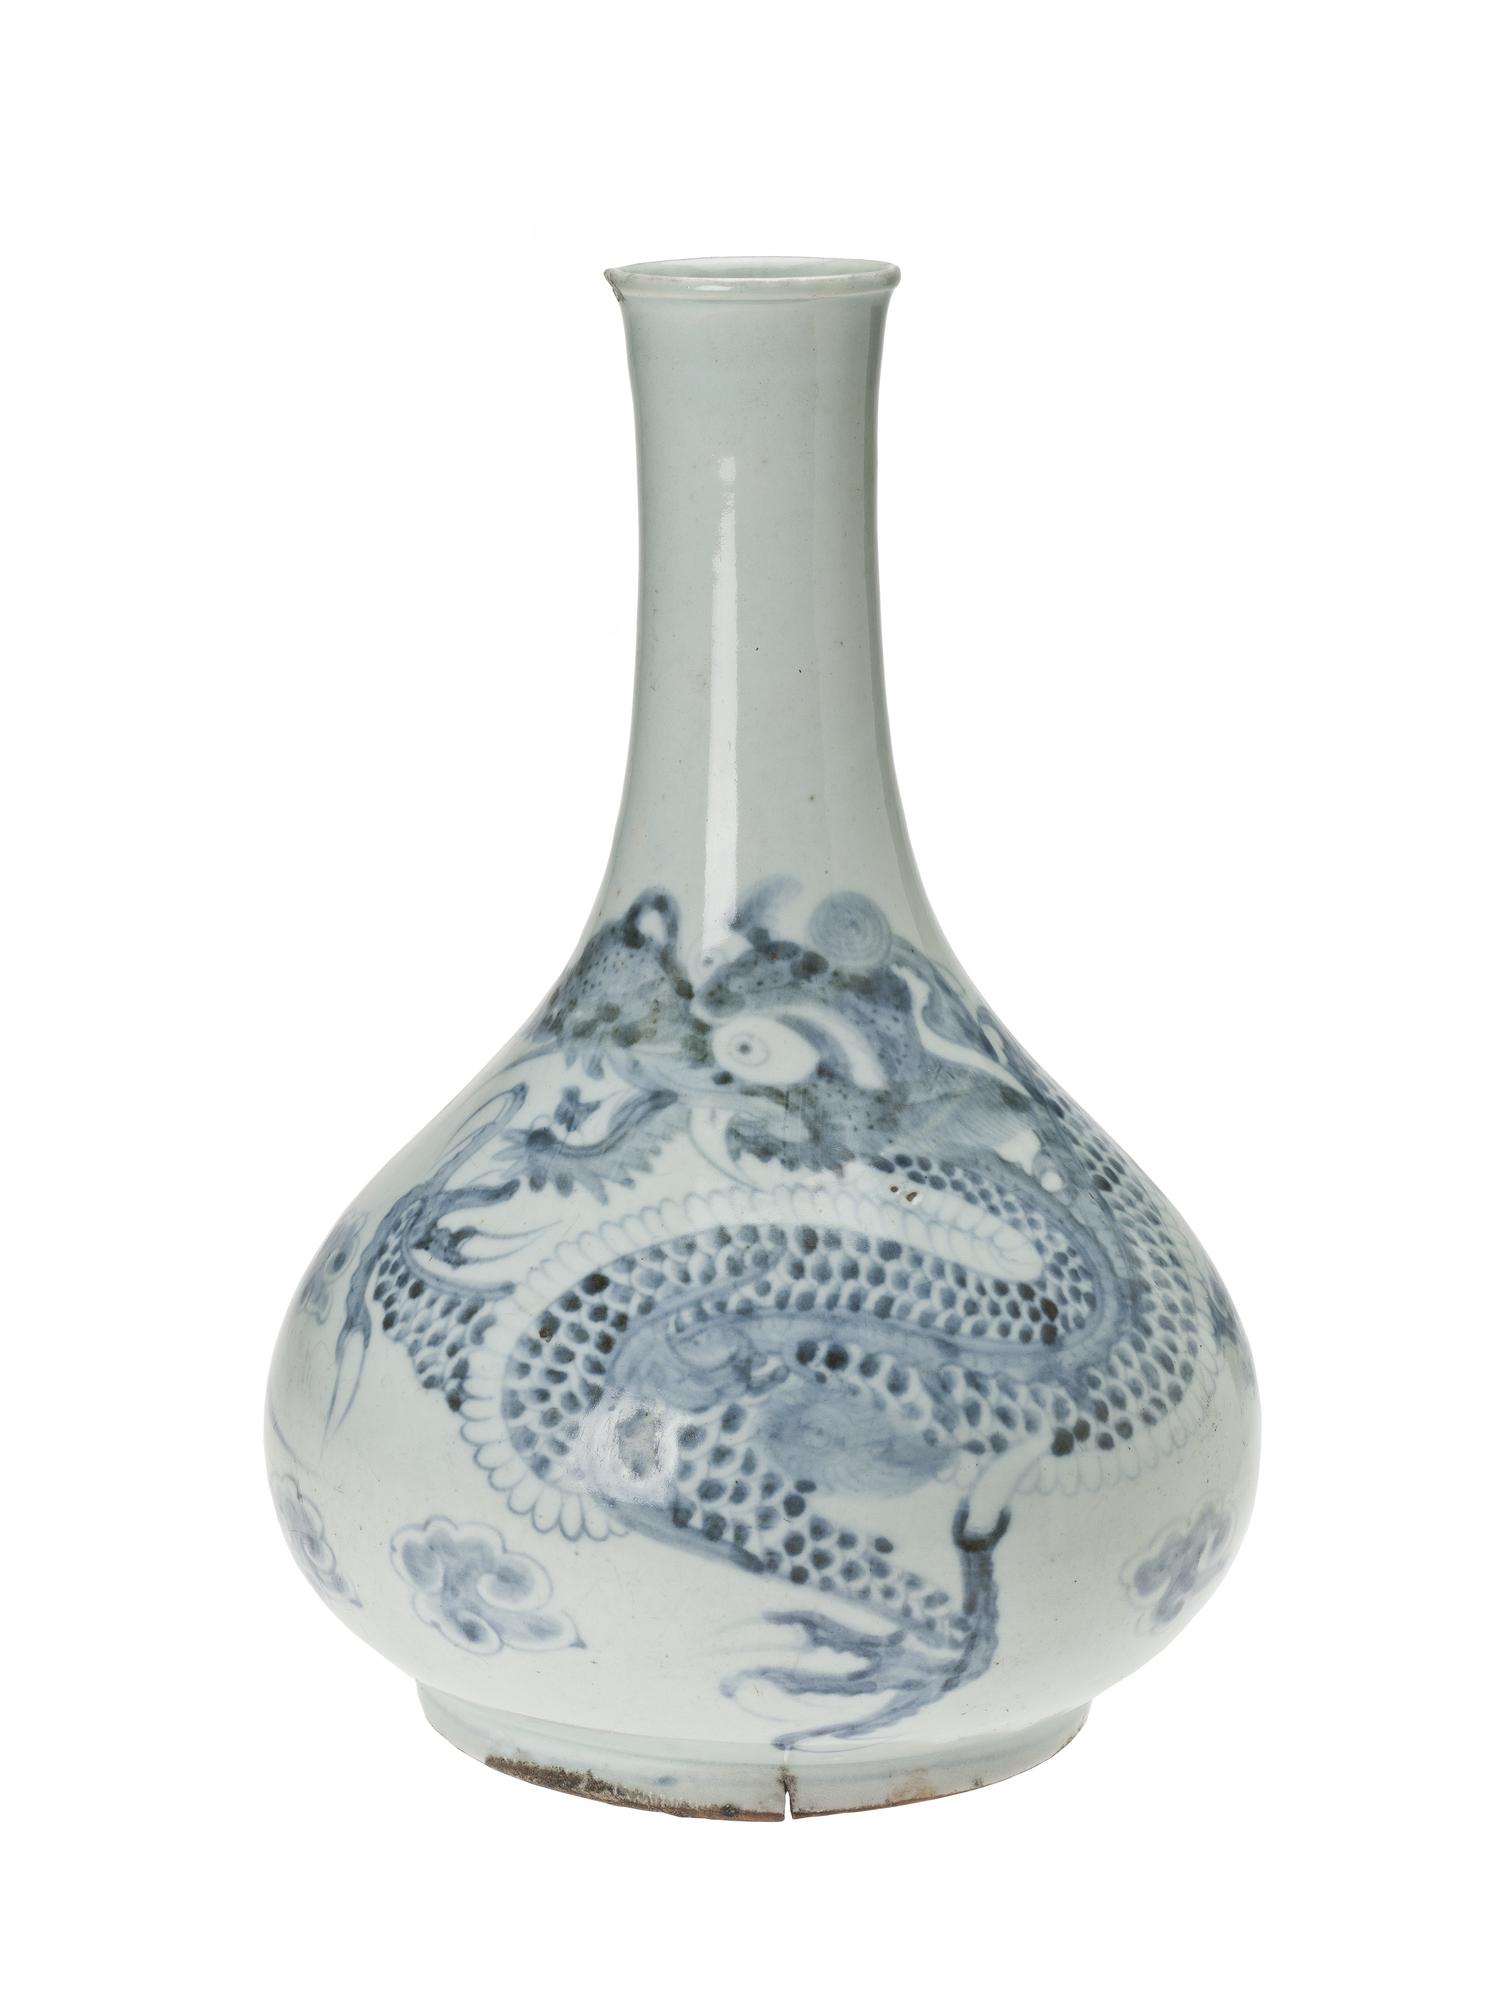 joseon-dragon-vase.jpg